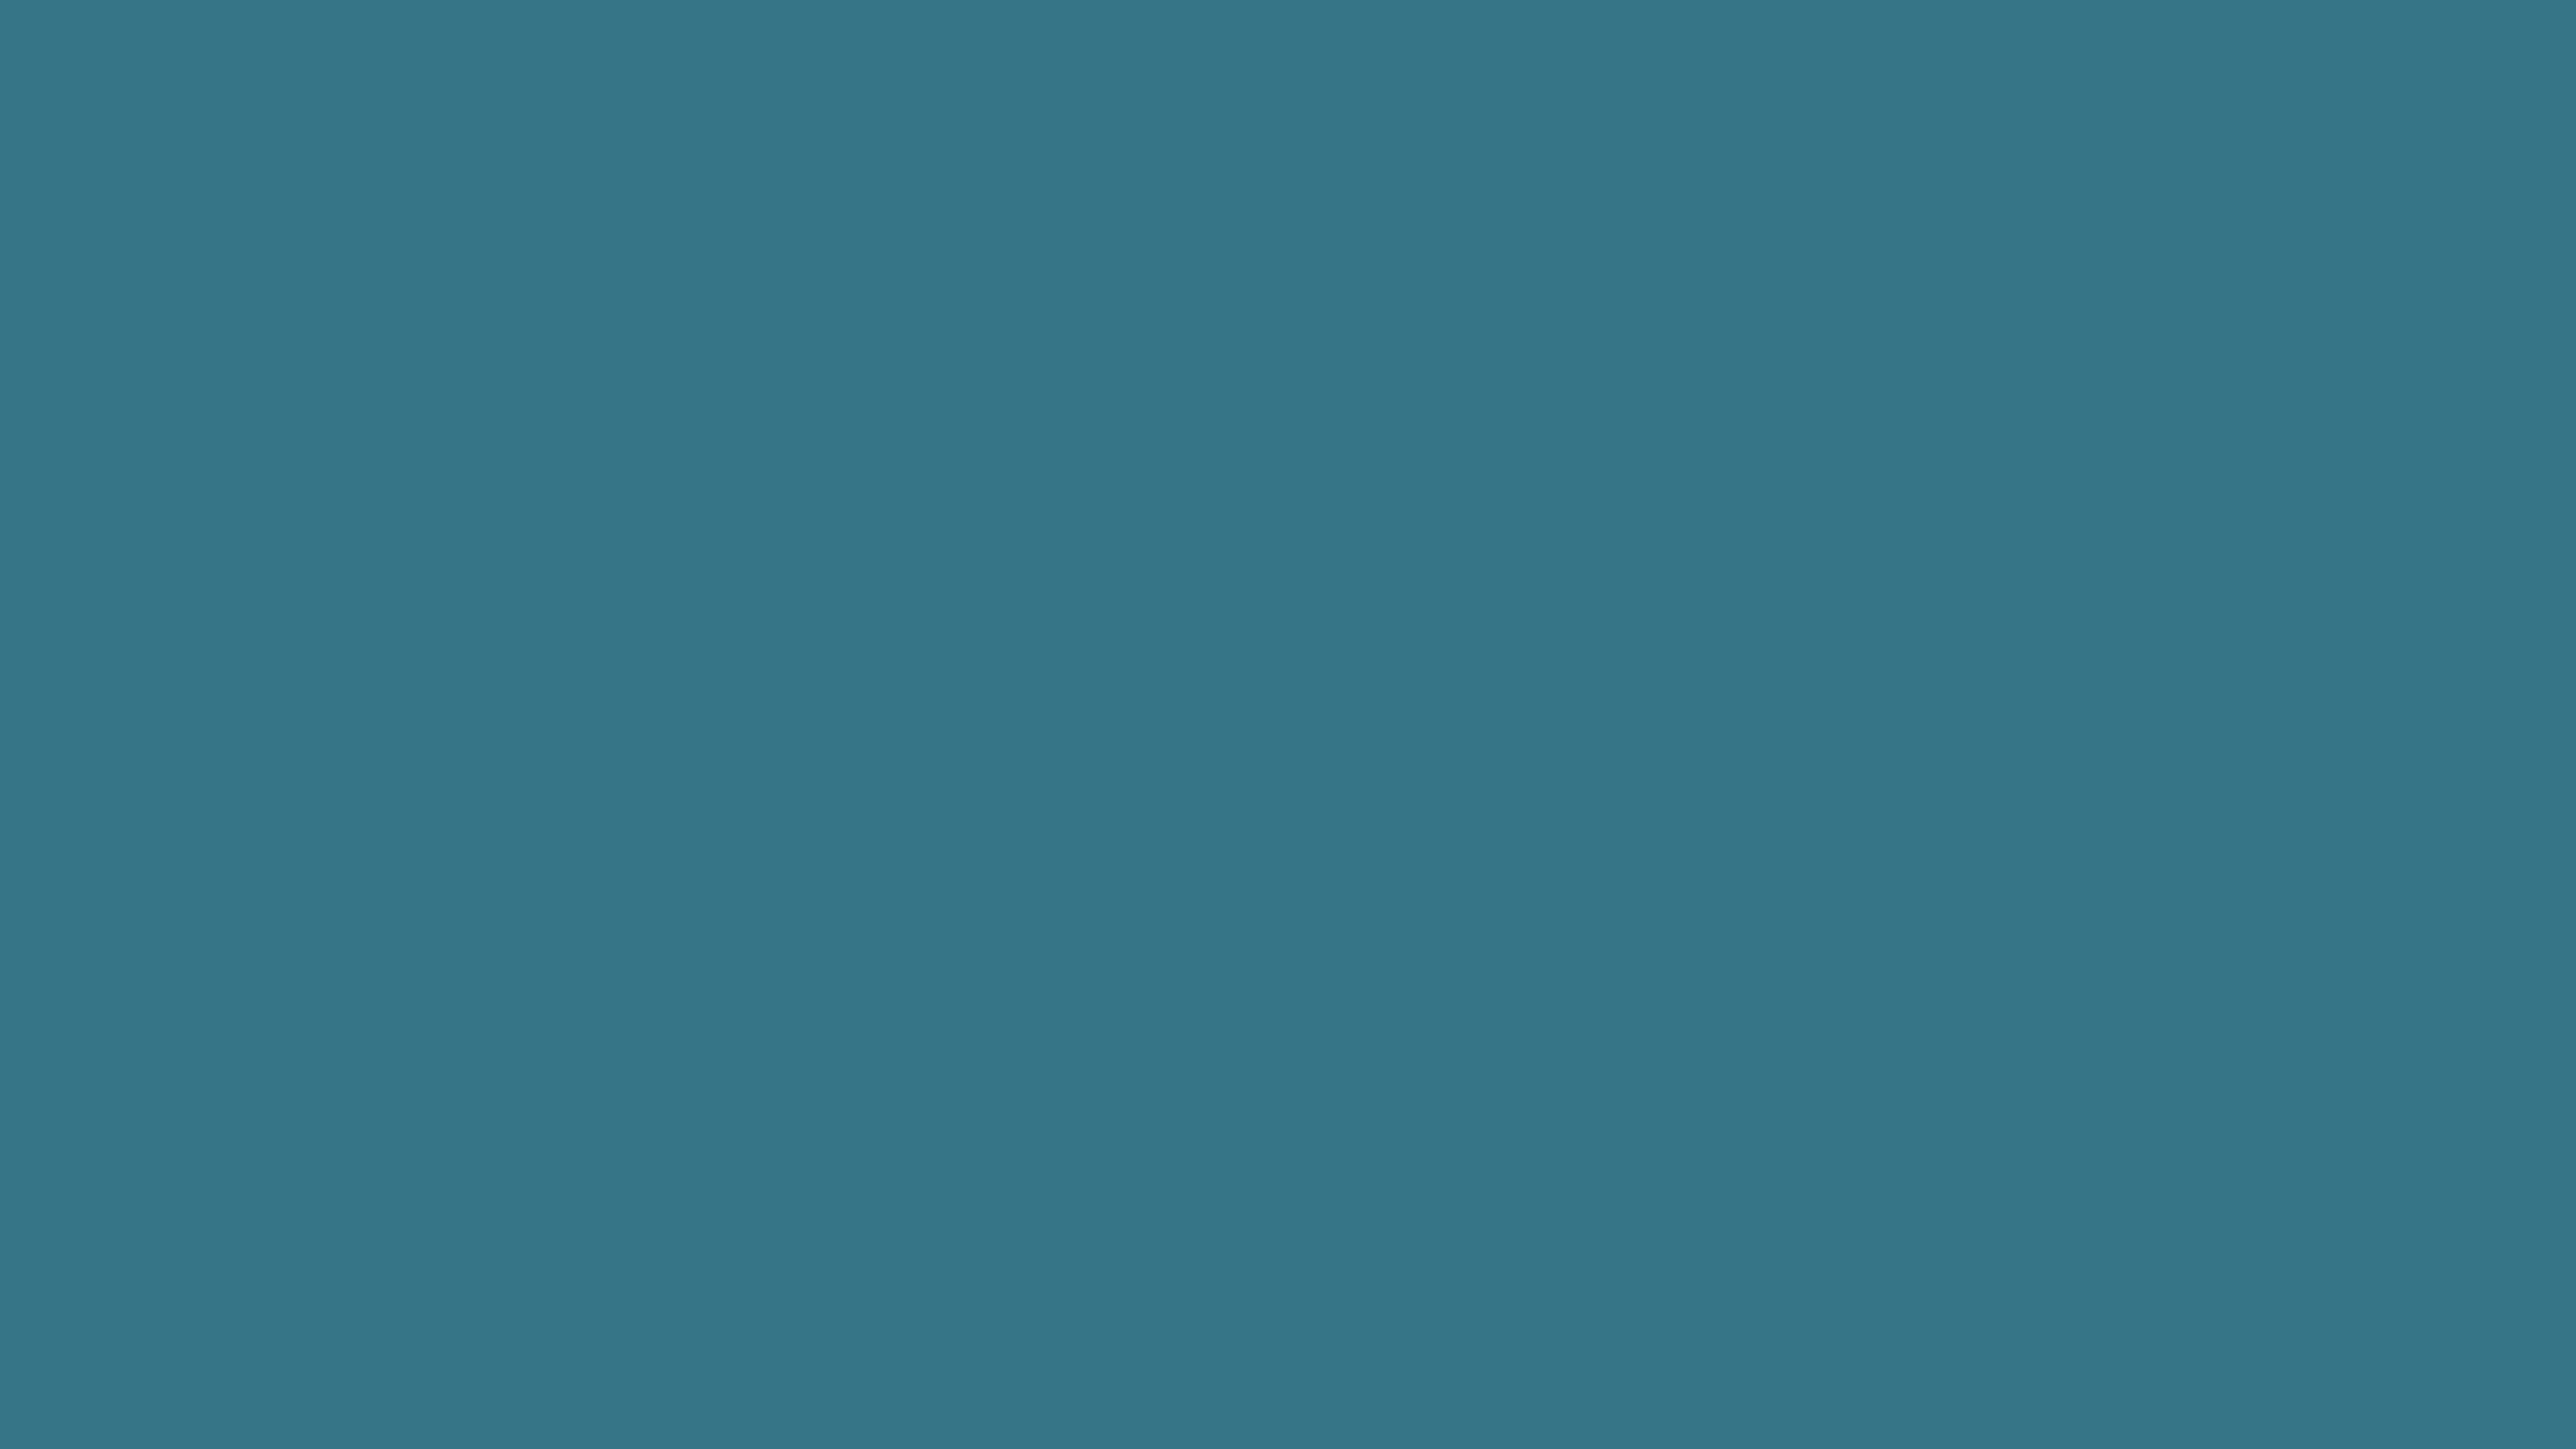 7680x4320 Teal Blue Solid Color Background